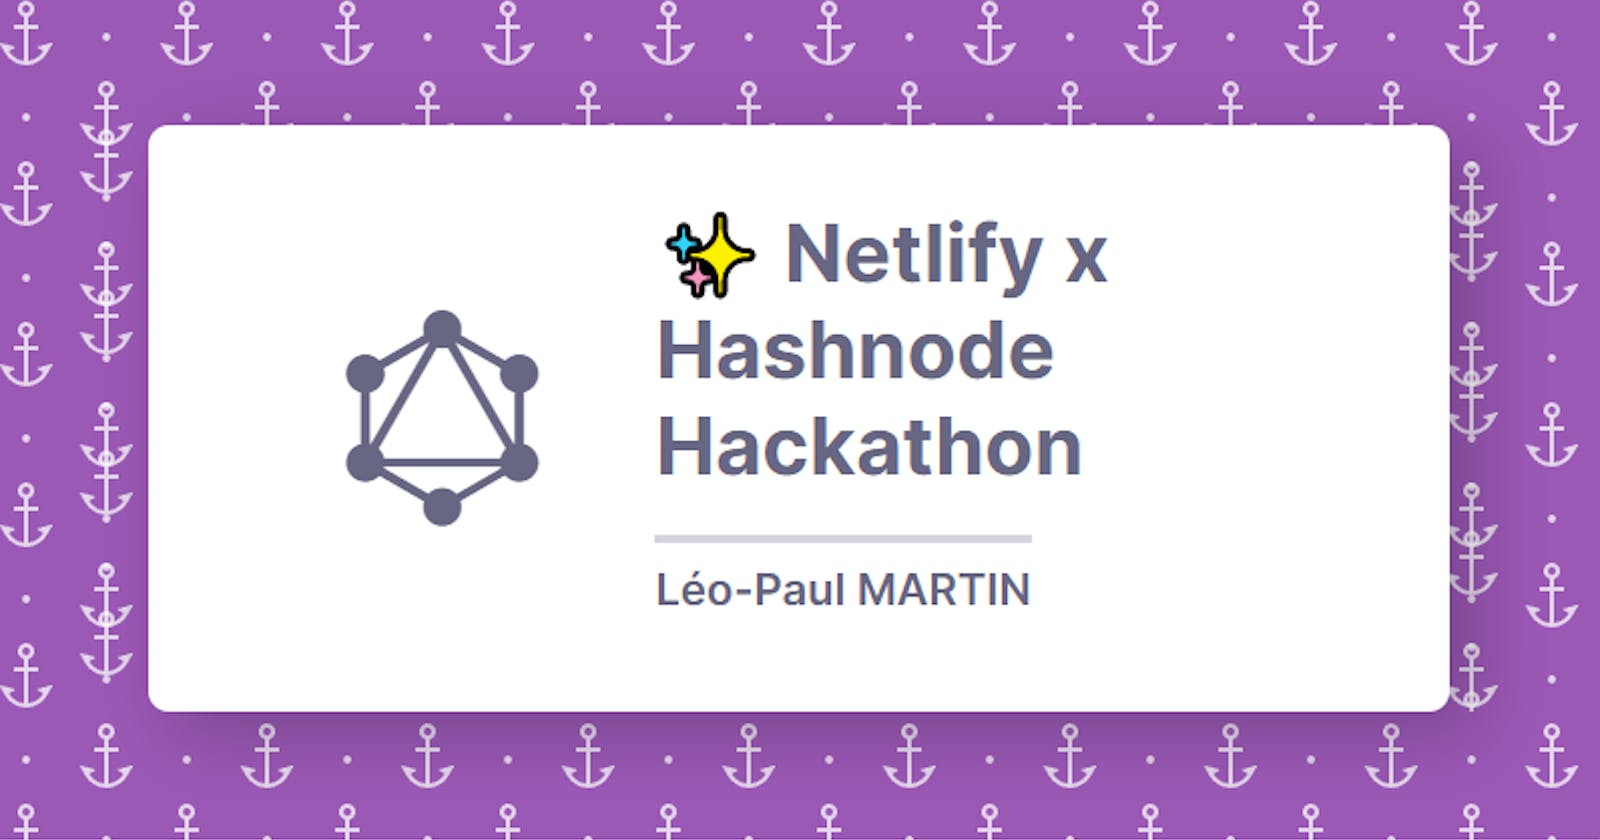 ✨ Netlify x Hashnode Hackathon